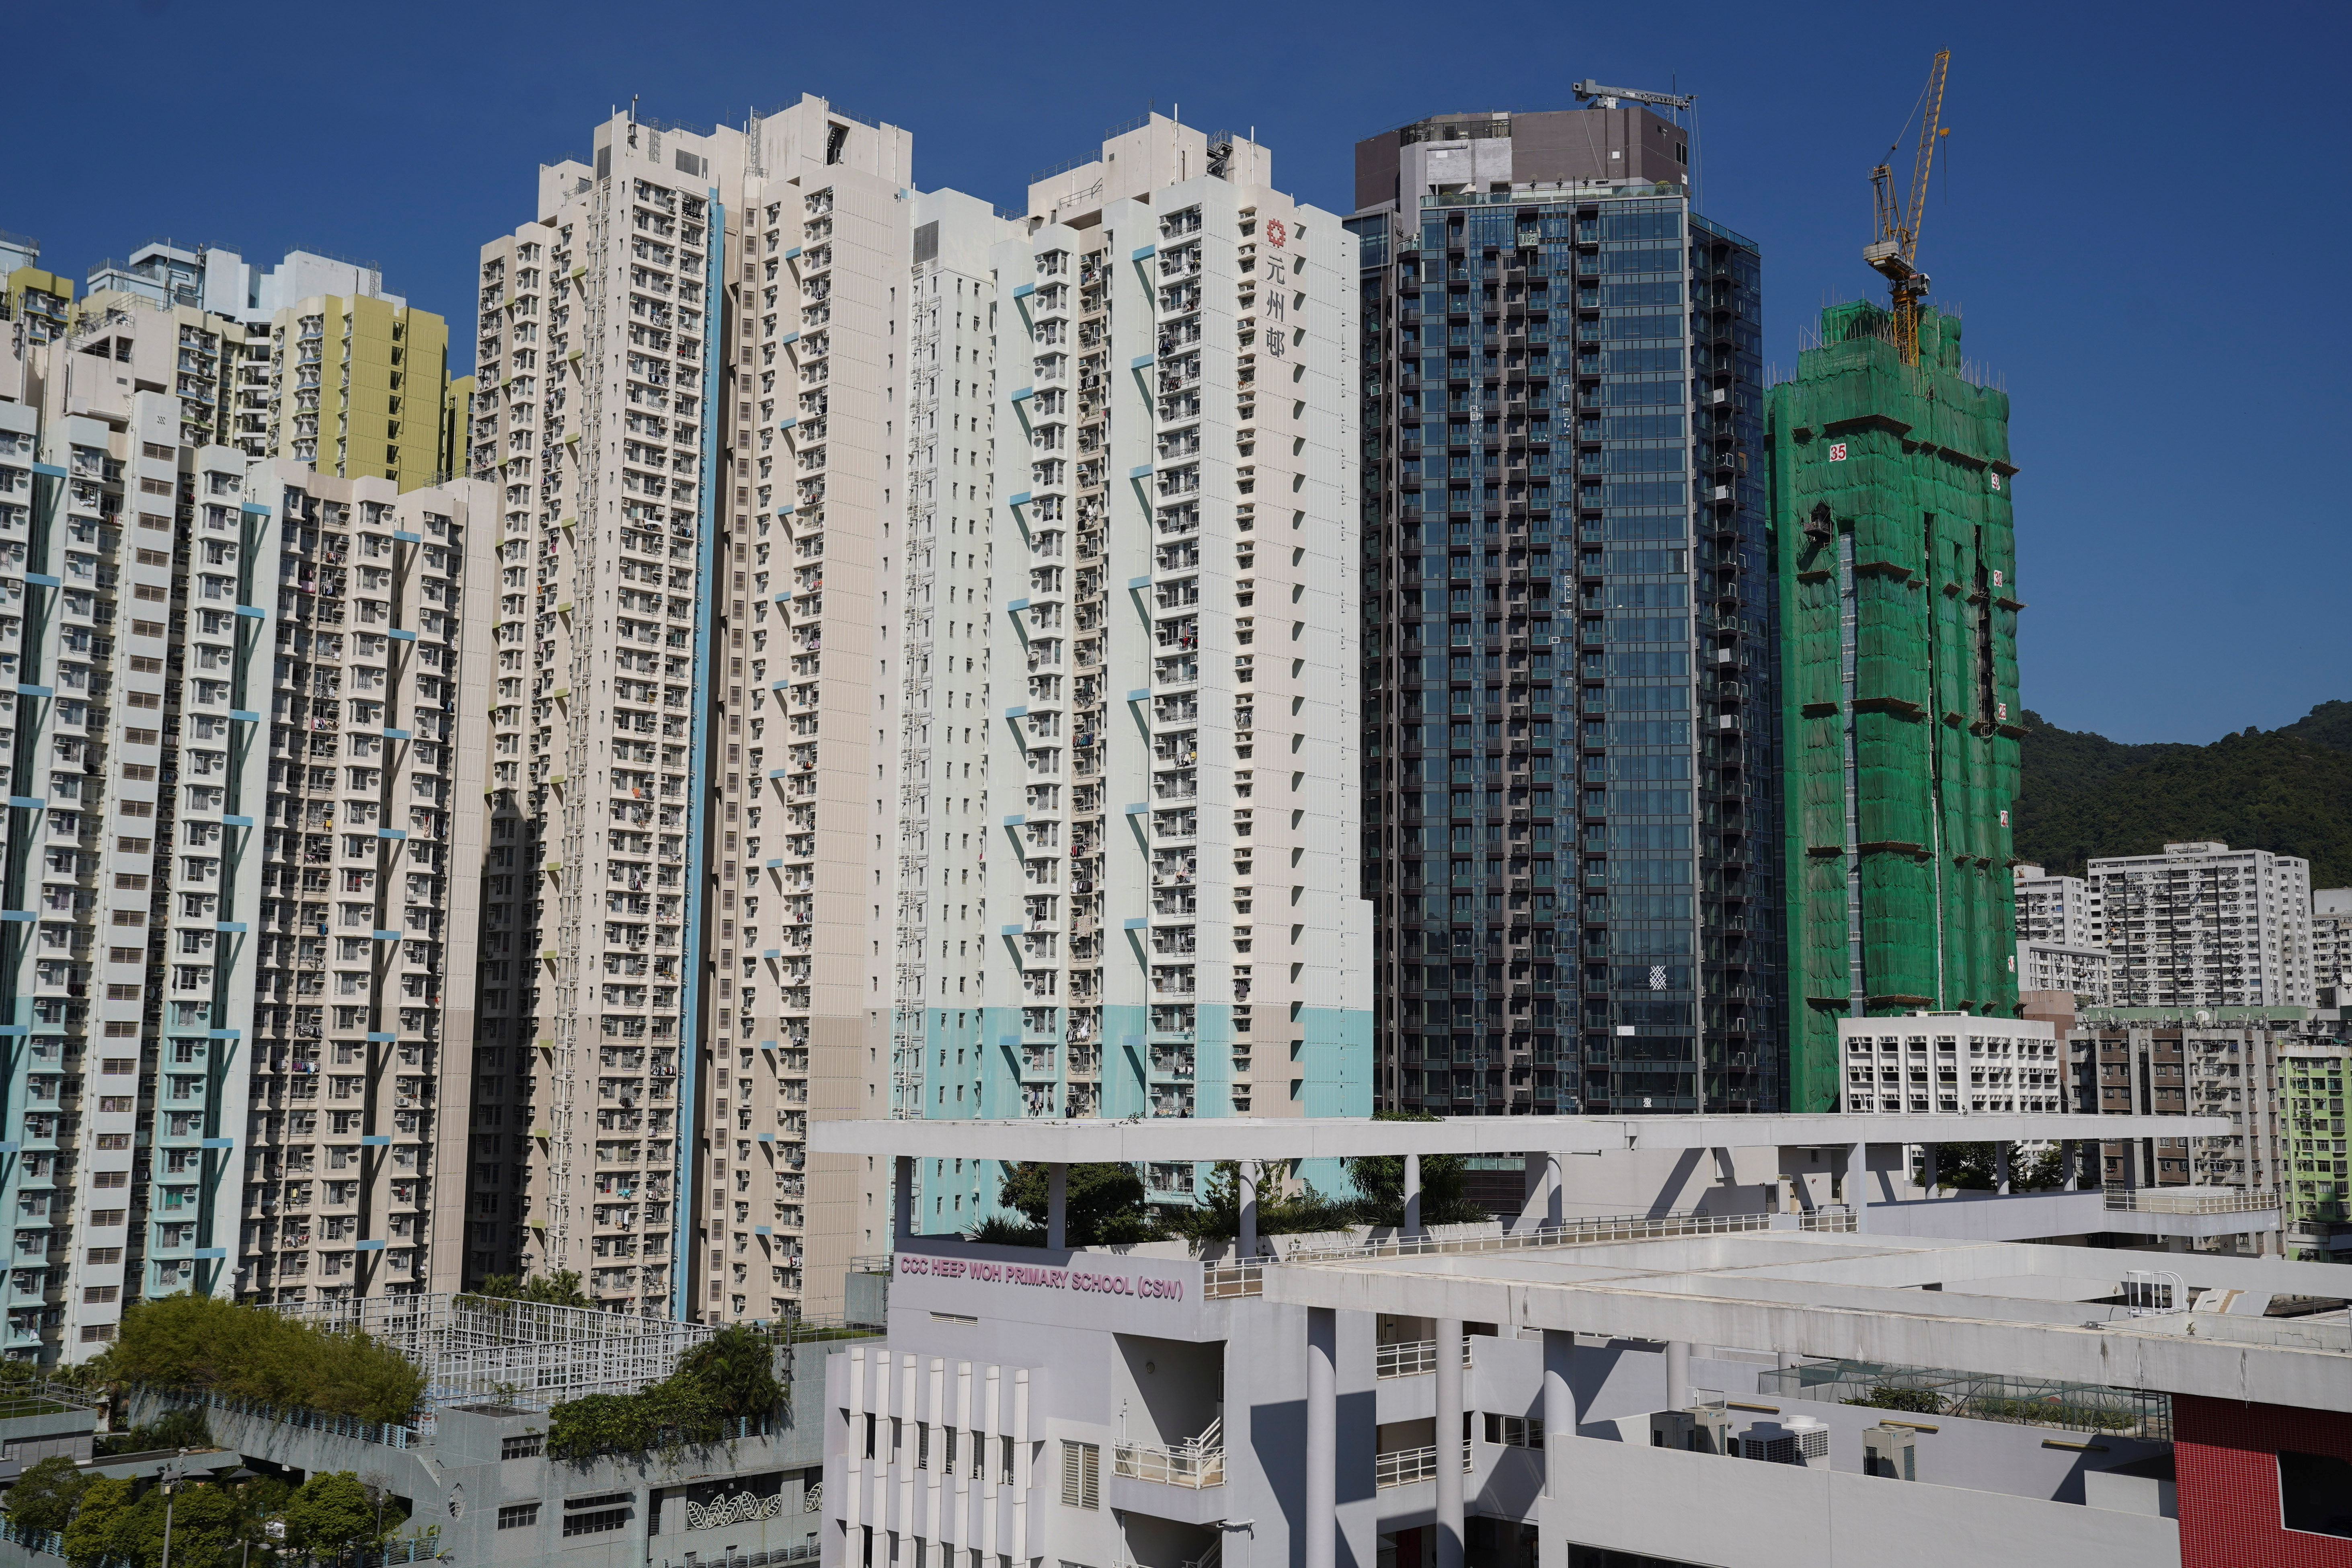 A general view of residential buildings in Hong Kong